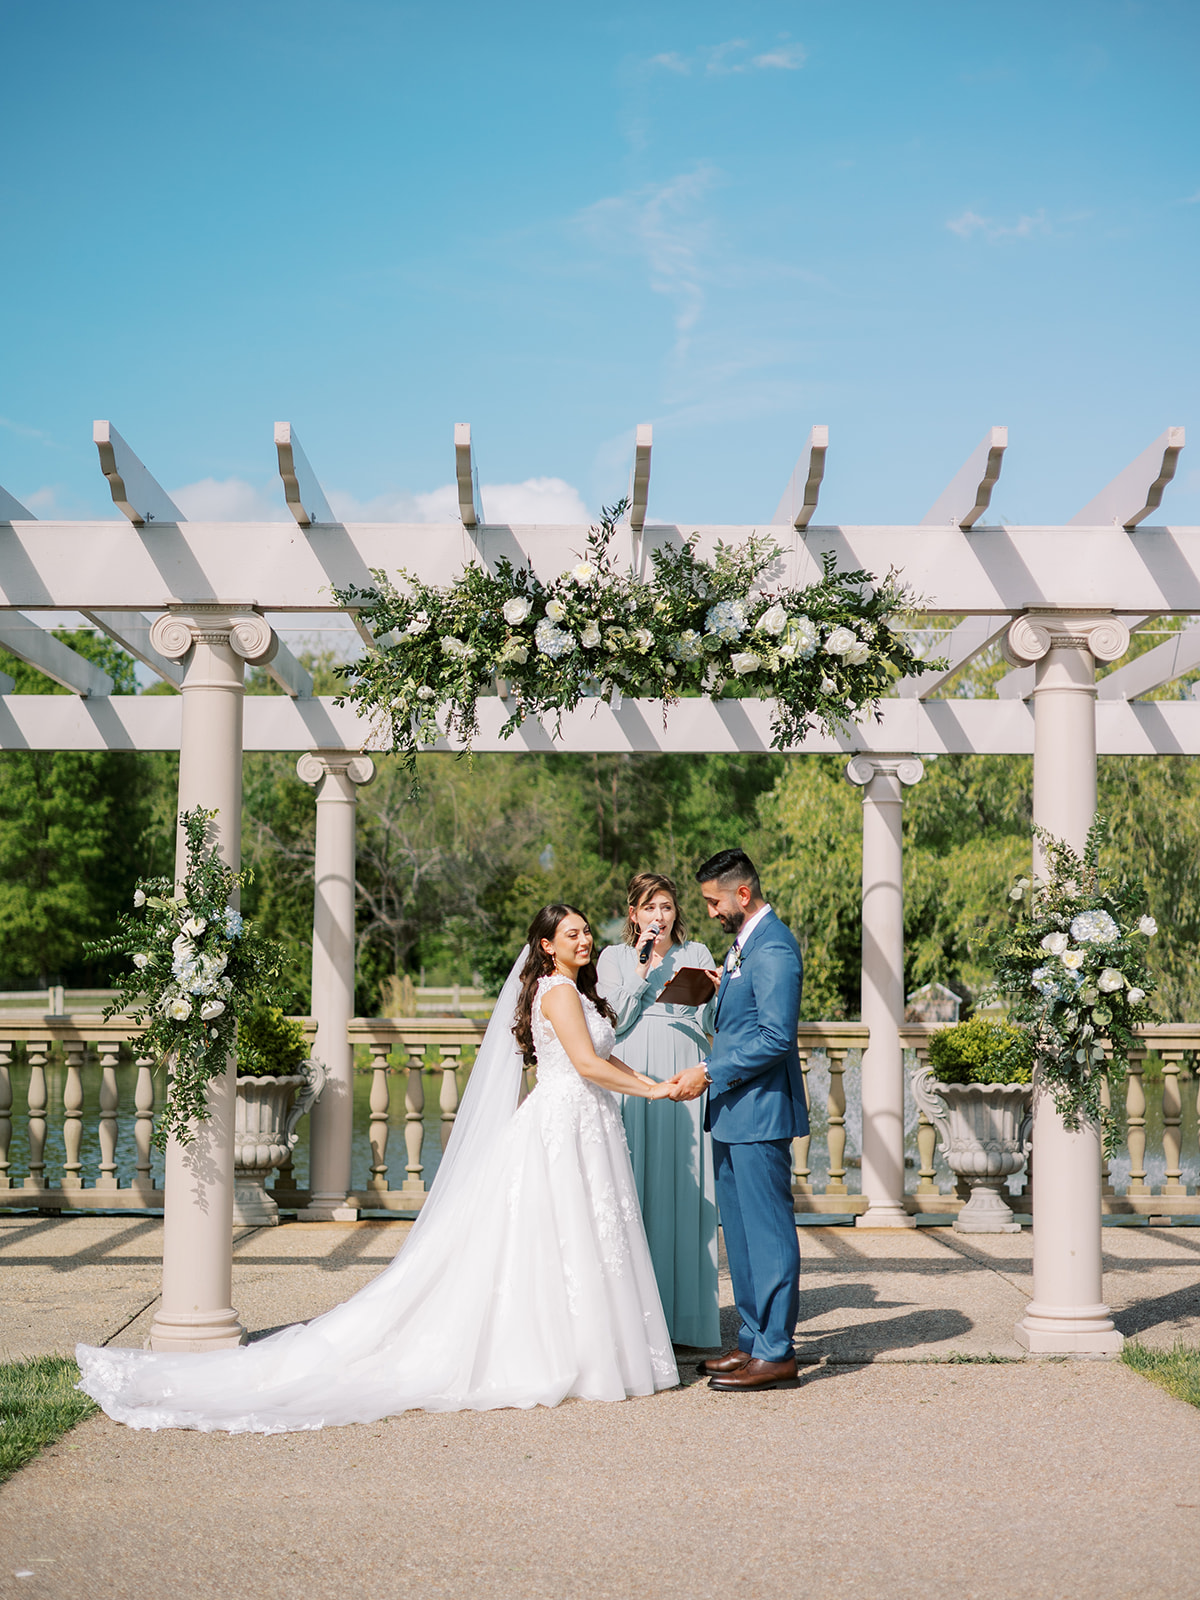 morais vineyard winery virginia bealeton wedding bride and groom arch outdoor ceremony hanging rose florals rustic decor